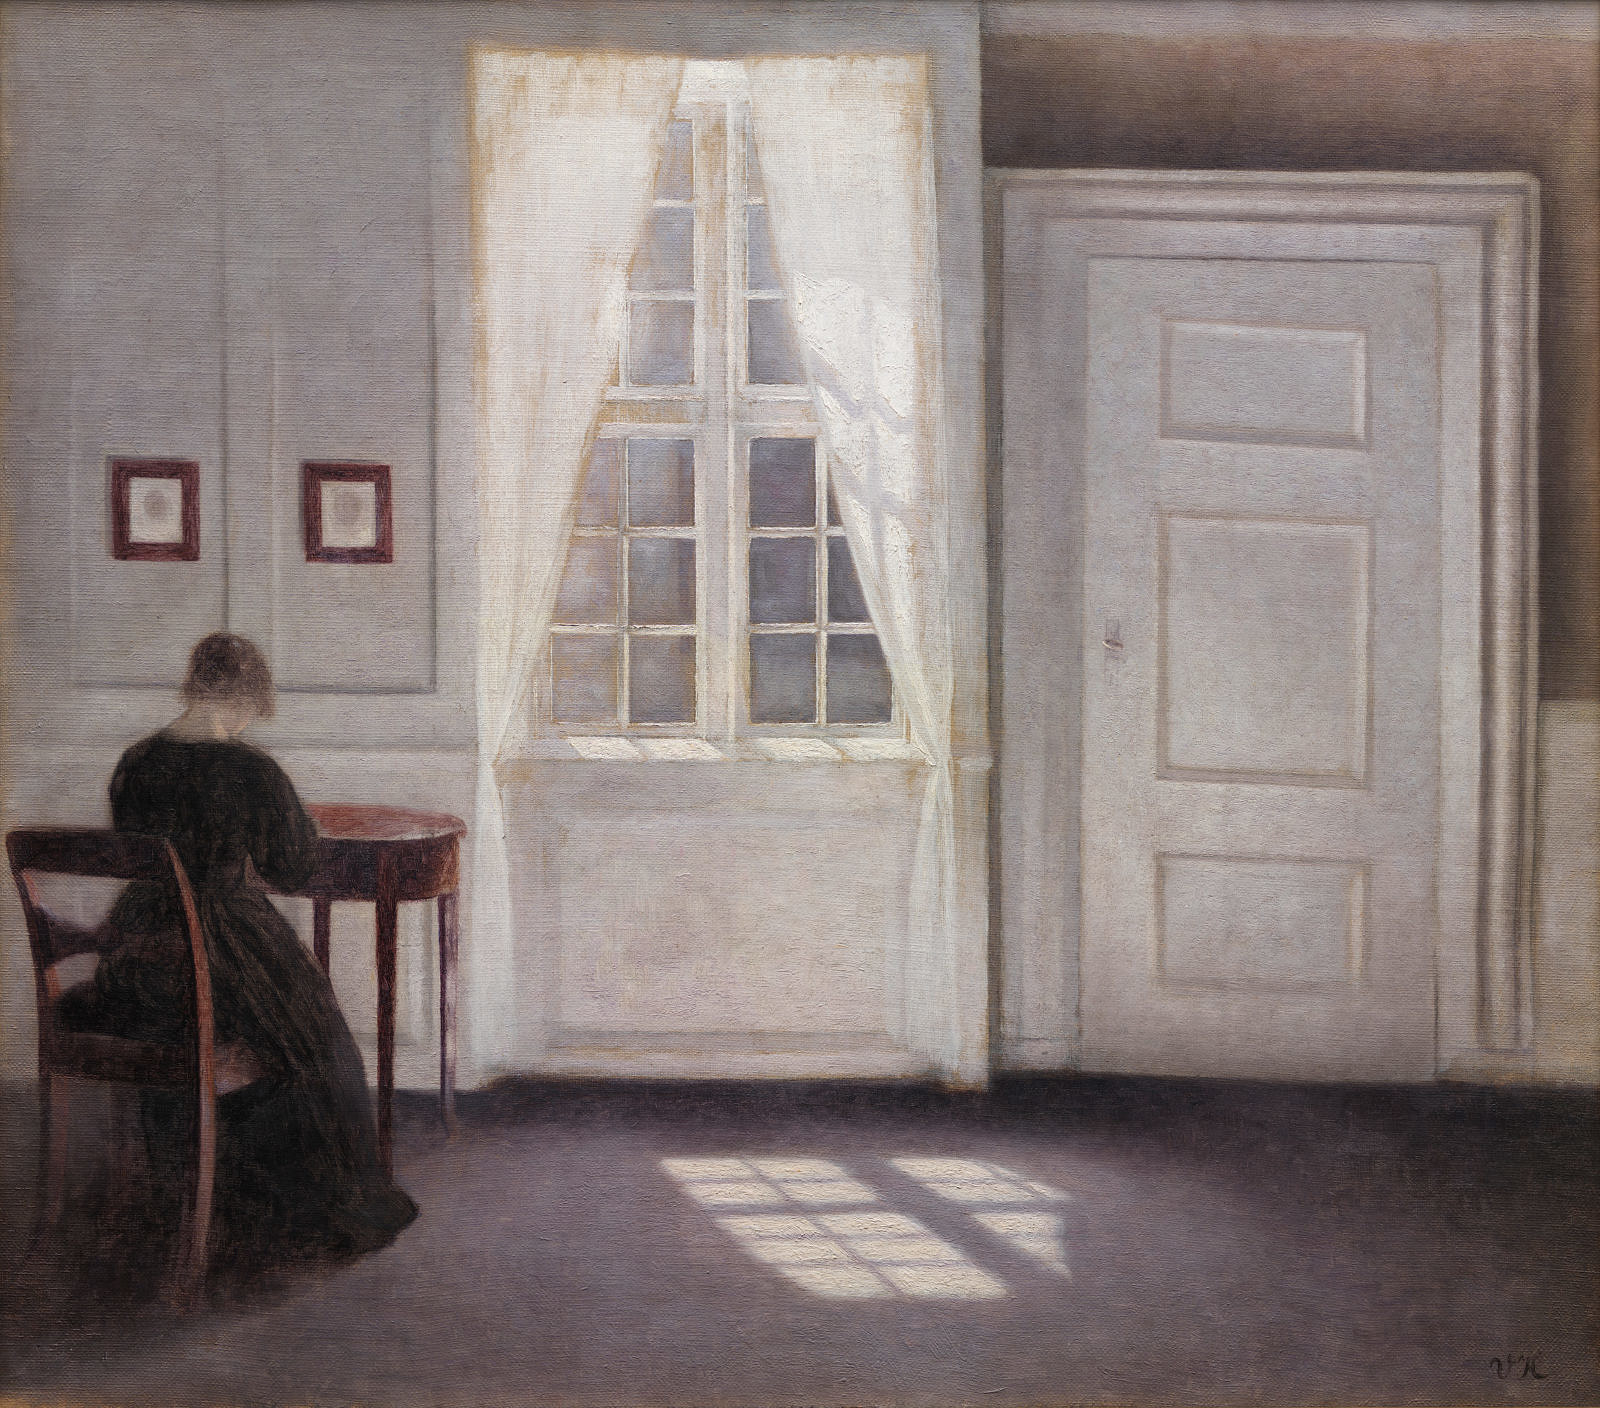   Vilhelm Hammershøi  Interior in Strandgade, Sunlight on the Floor, 1901 Image: © SMK – The National Gallery of Denmark 